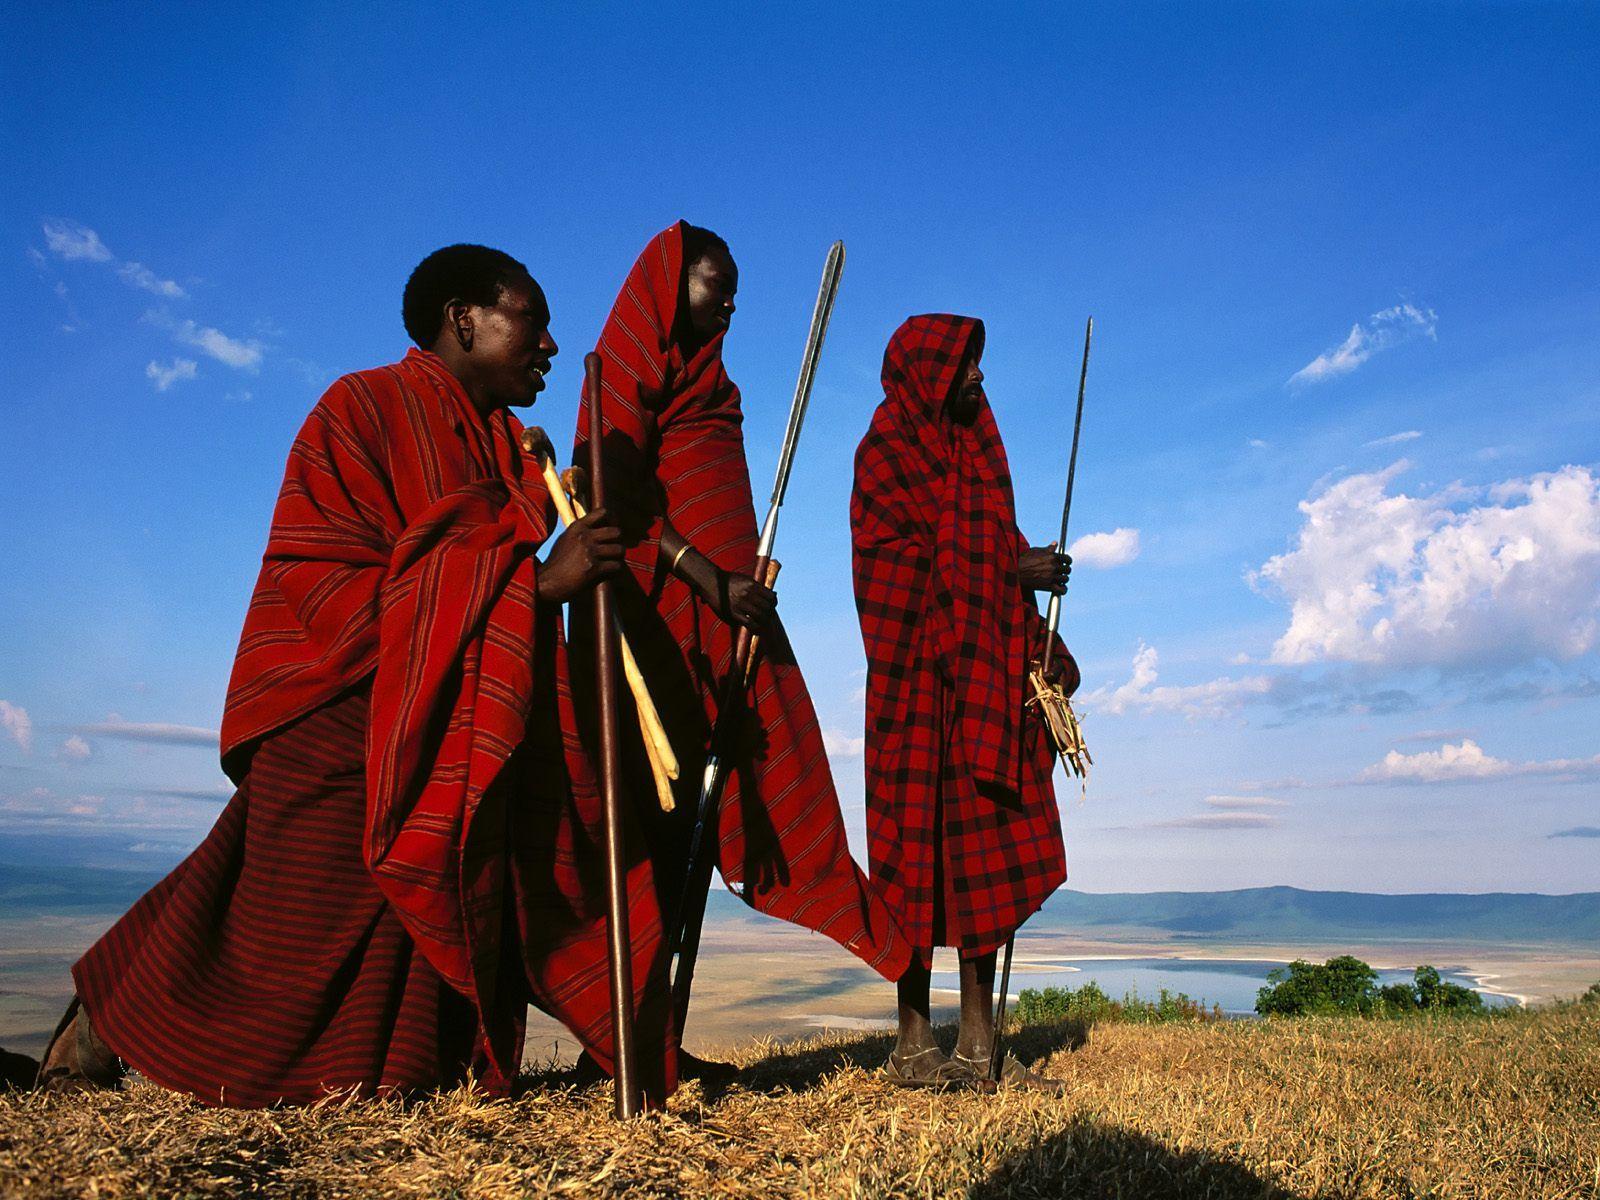 Племя дата выхода. Племя Масаи в Танзании. Африка Масаи. Кения племя Масаи. Африканское племя Масаи.